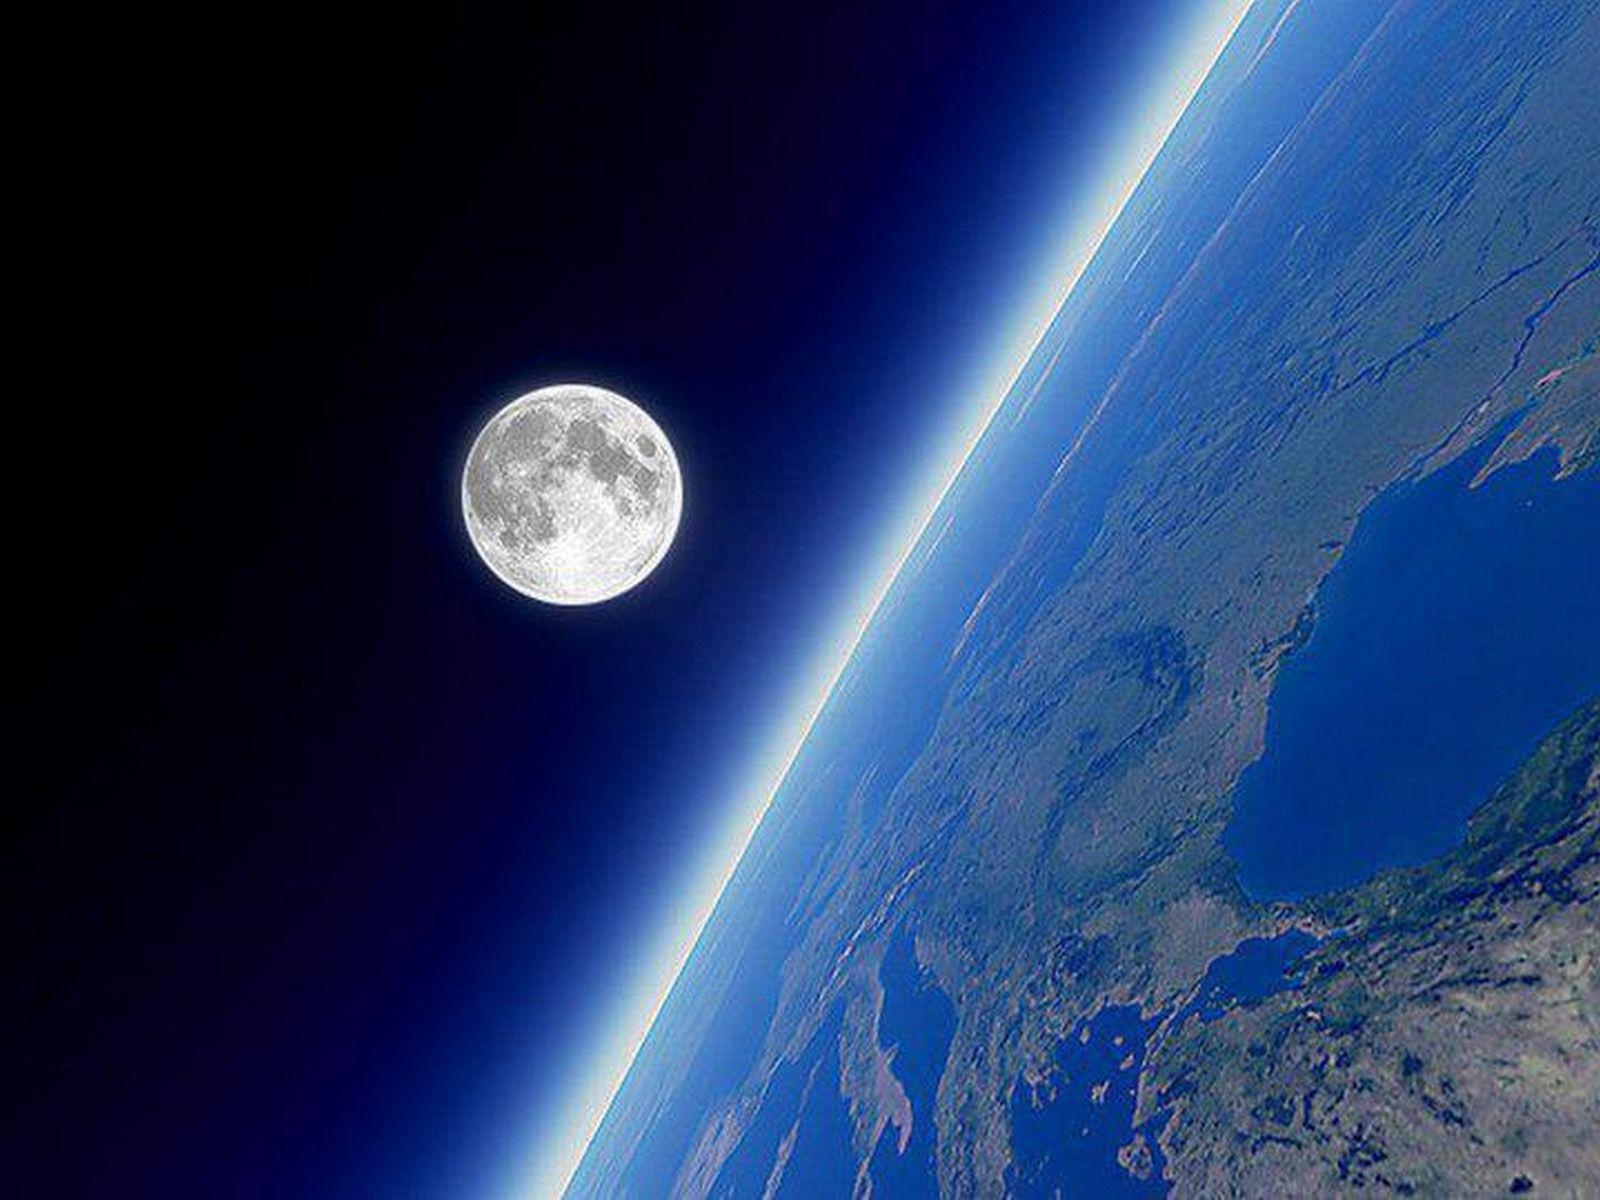 Moons satellite. Луна (Планета). Вид земли из космоса. О земле и космосе. Луна вид из космоса.